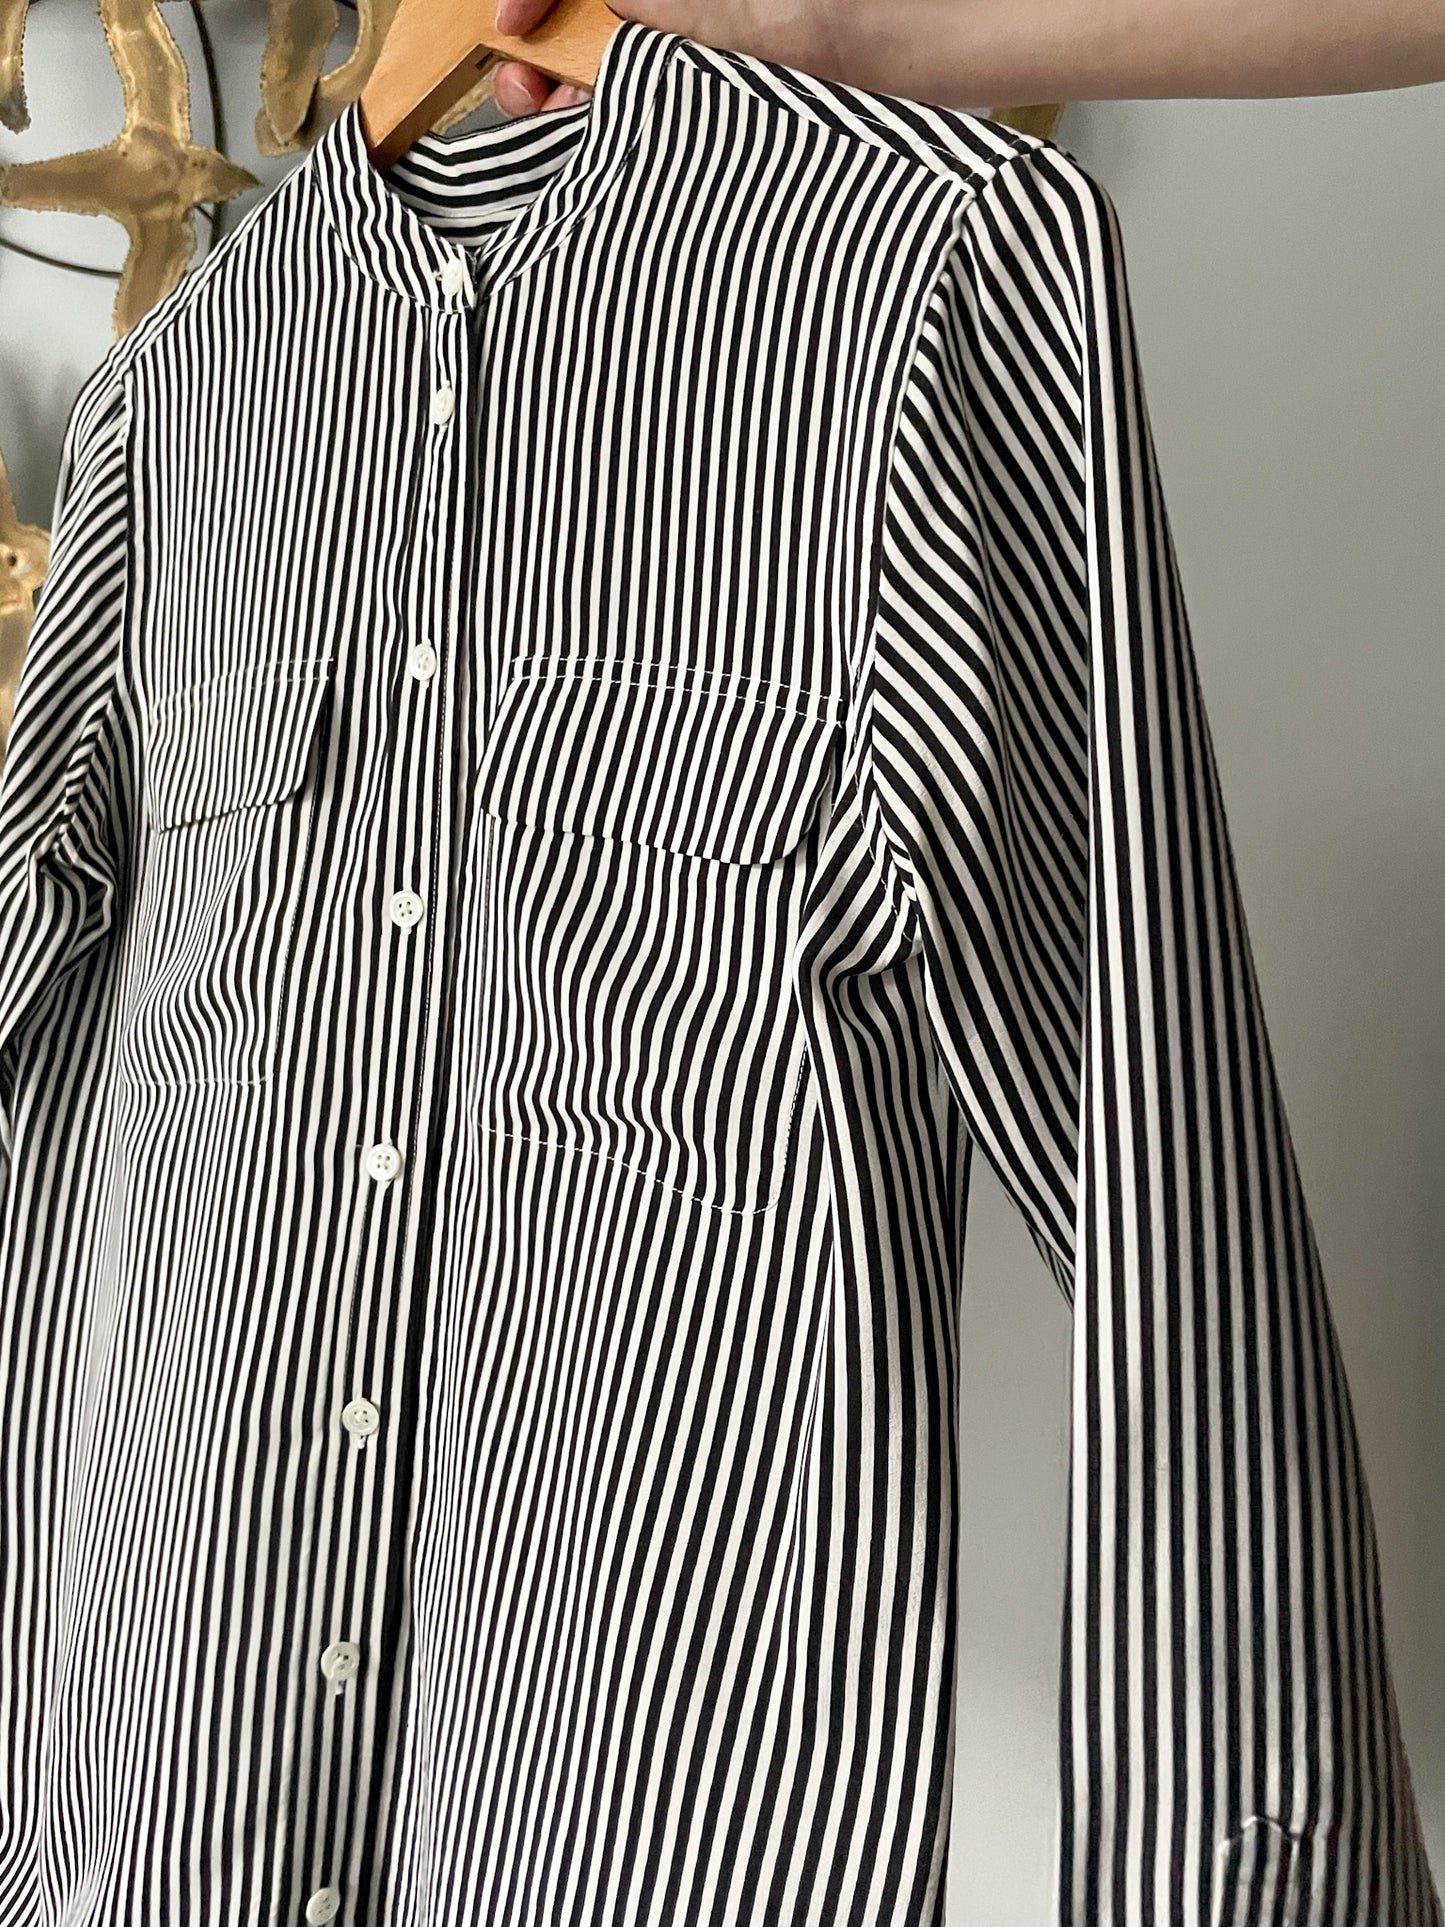 Equipment Femme Black White Stripe 100% Silk Slim Signature Shirt - XS/S